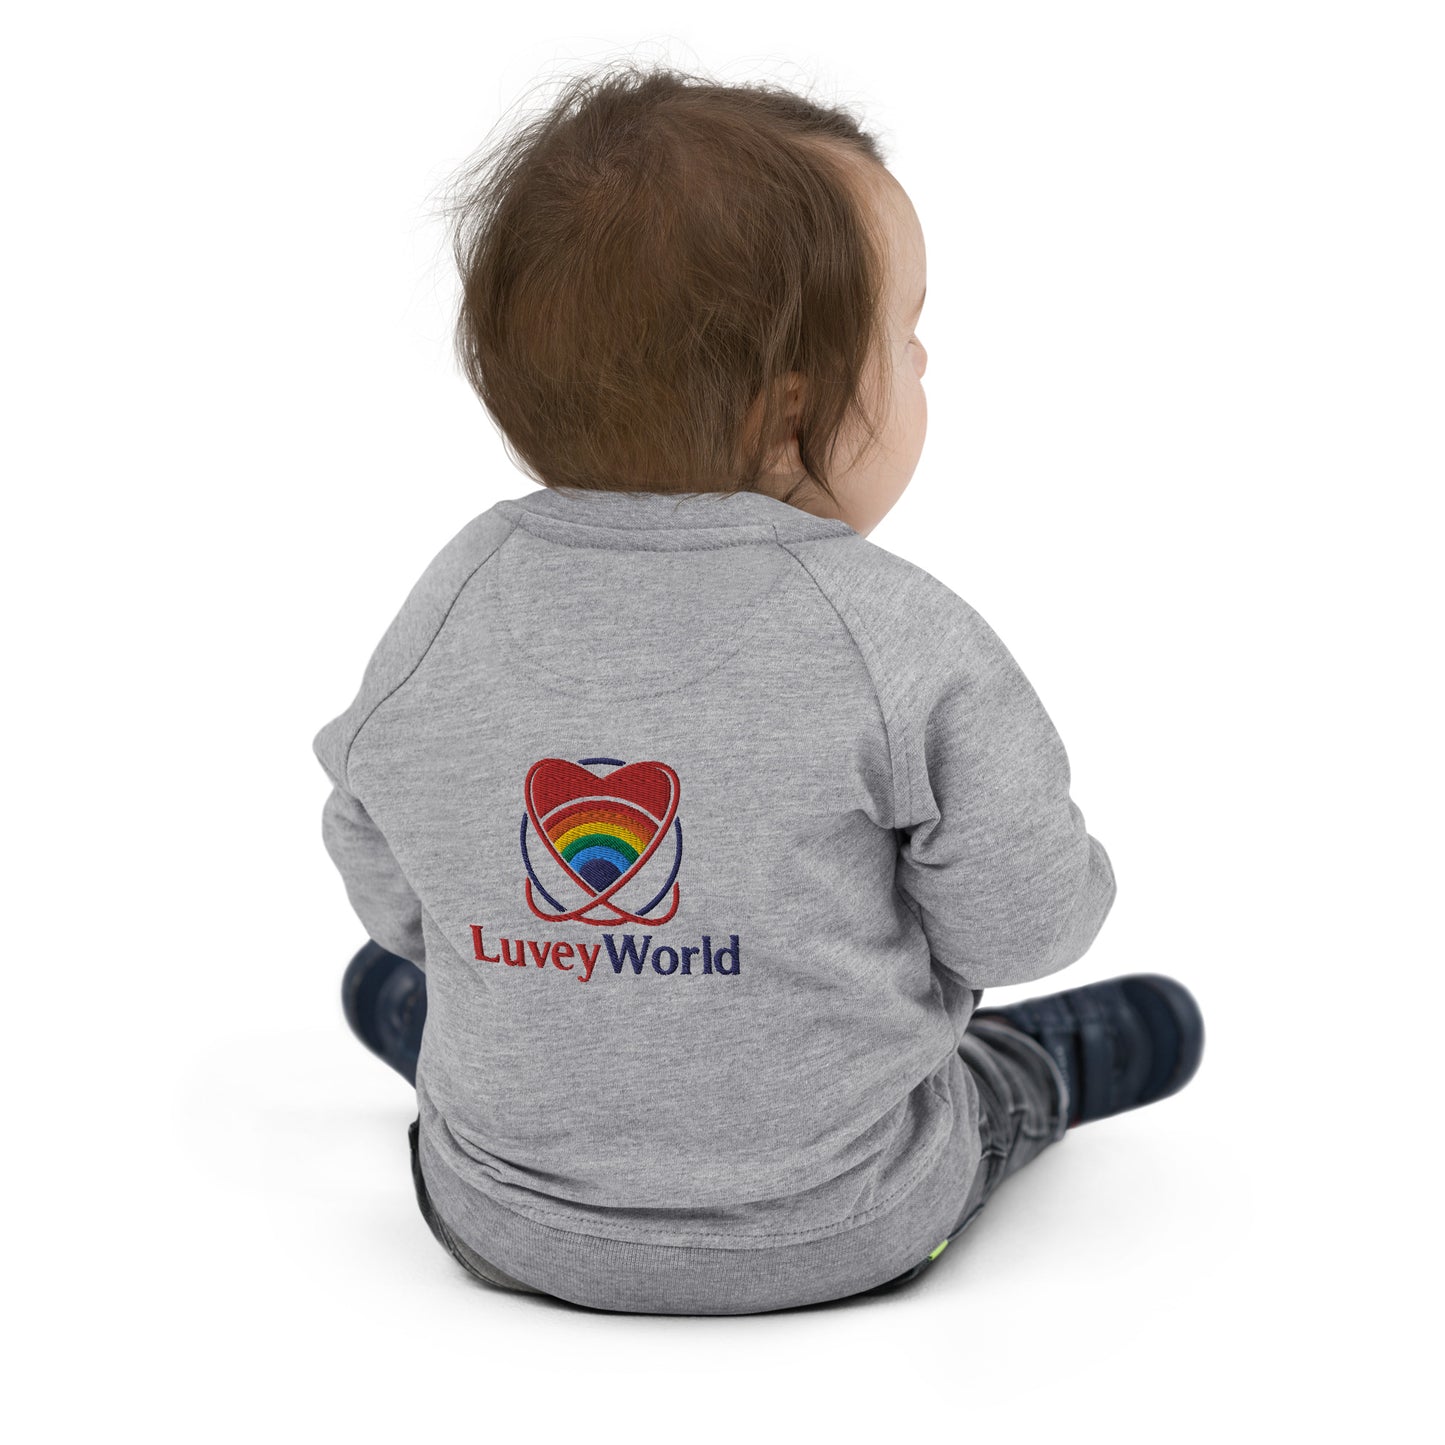 LuveyWorld Baby Organic Bomberjacka